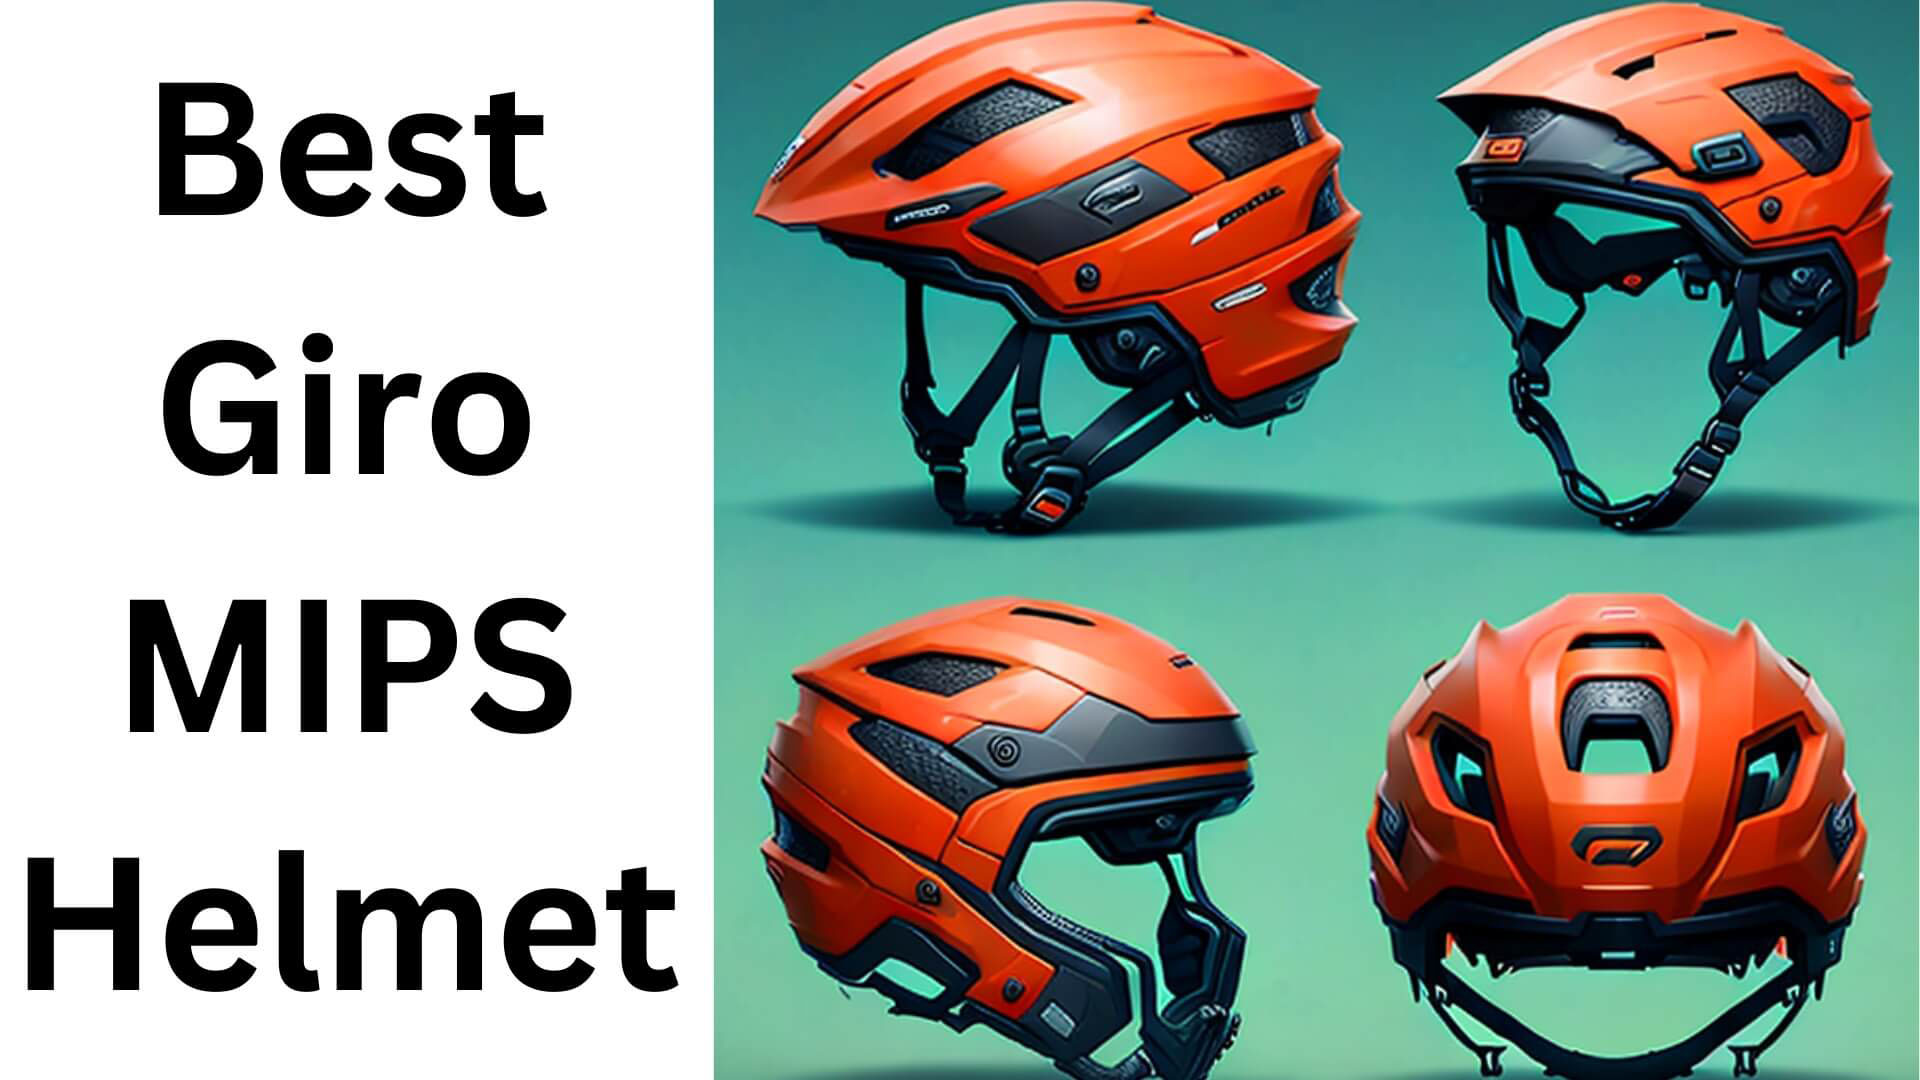 The 11 Best Giro Mips Helmet Options of 2023 According to Riders